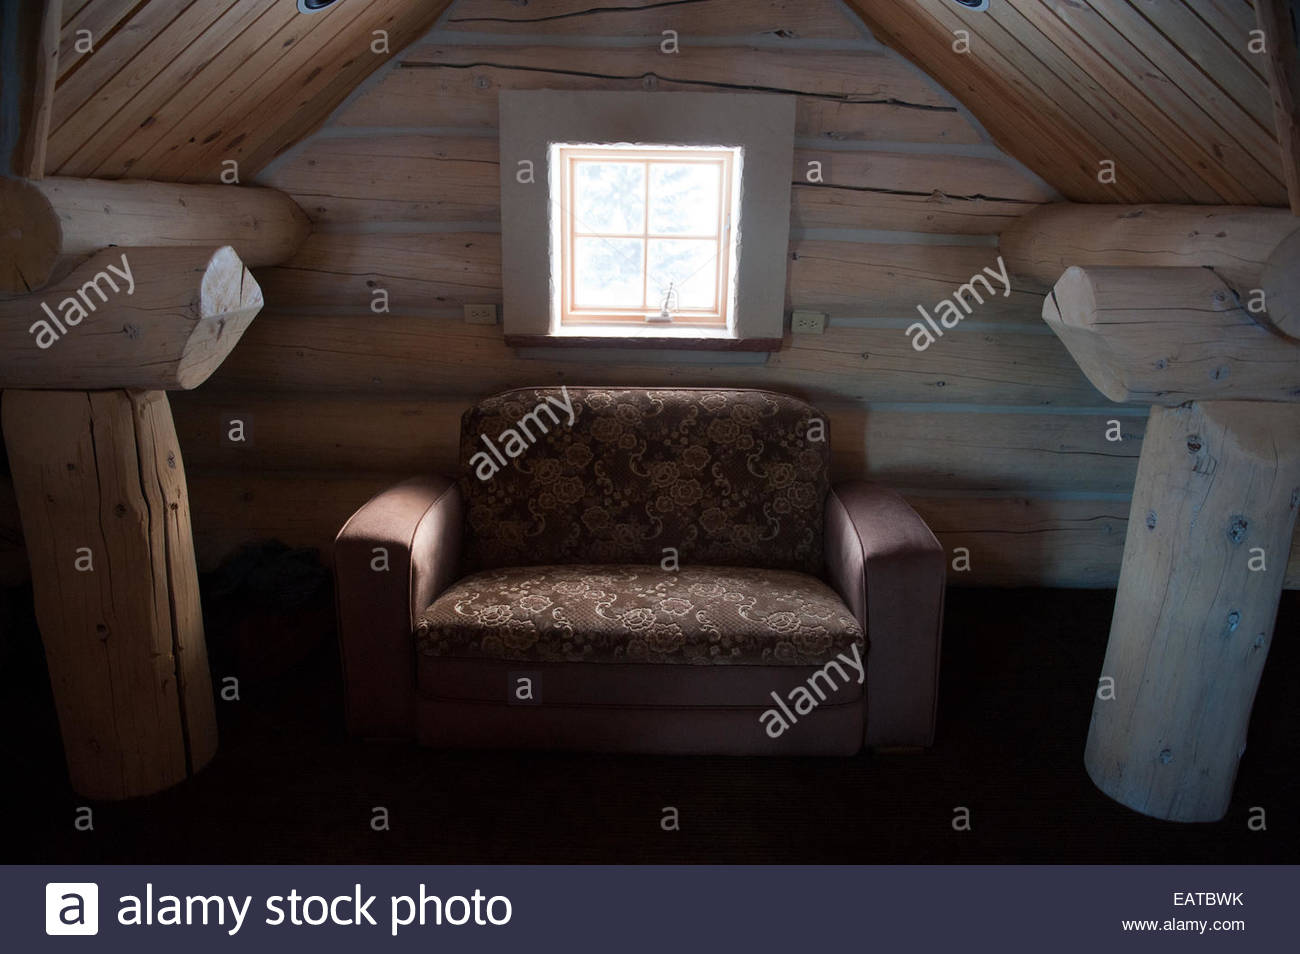 The Attic Of A Log Cabin In Denver Colorado Stock Photo 75524223